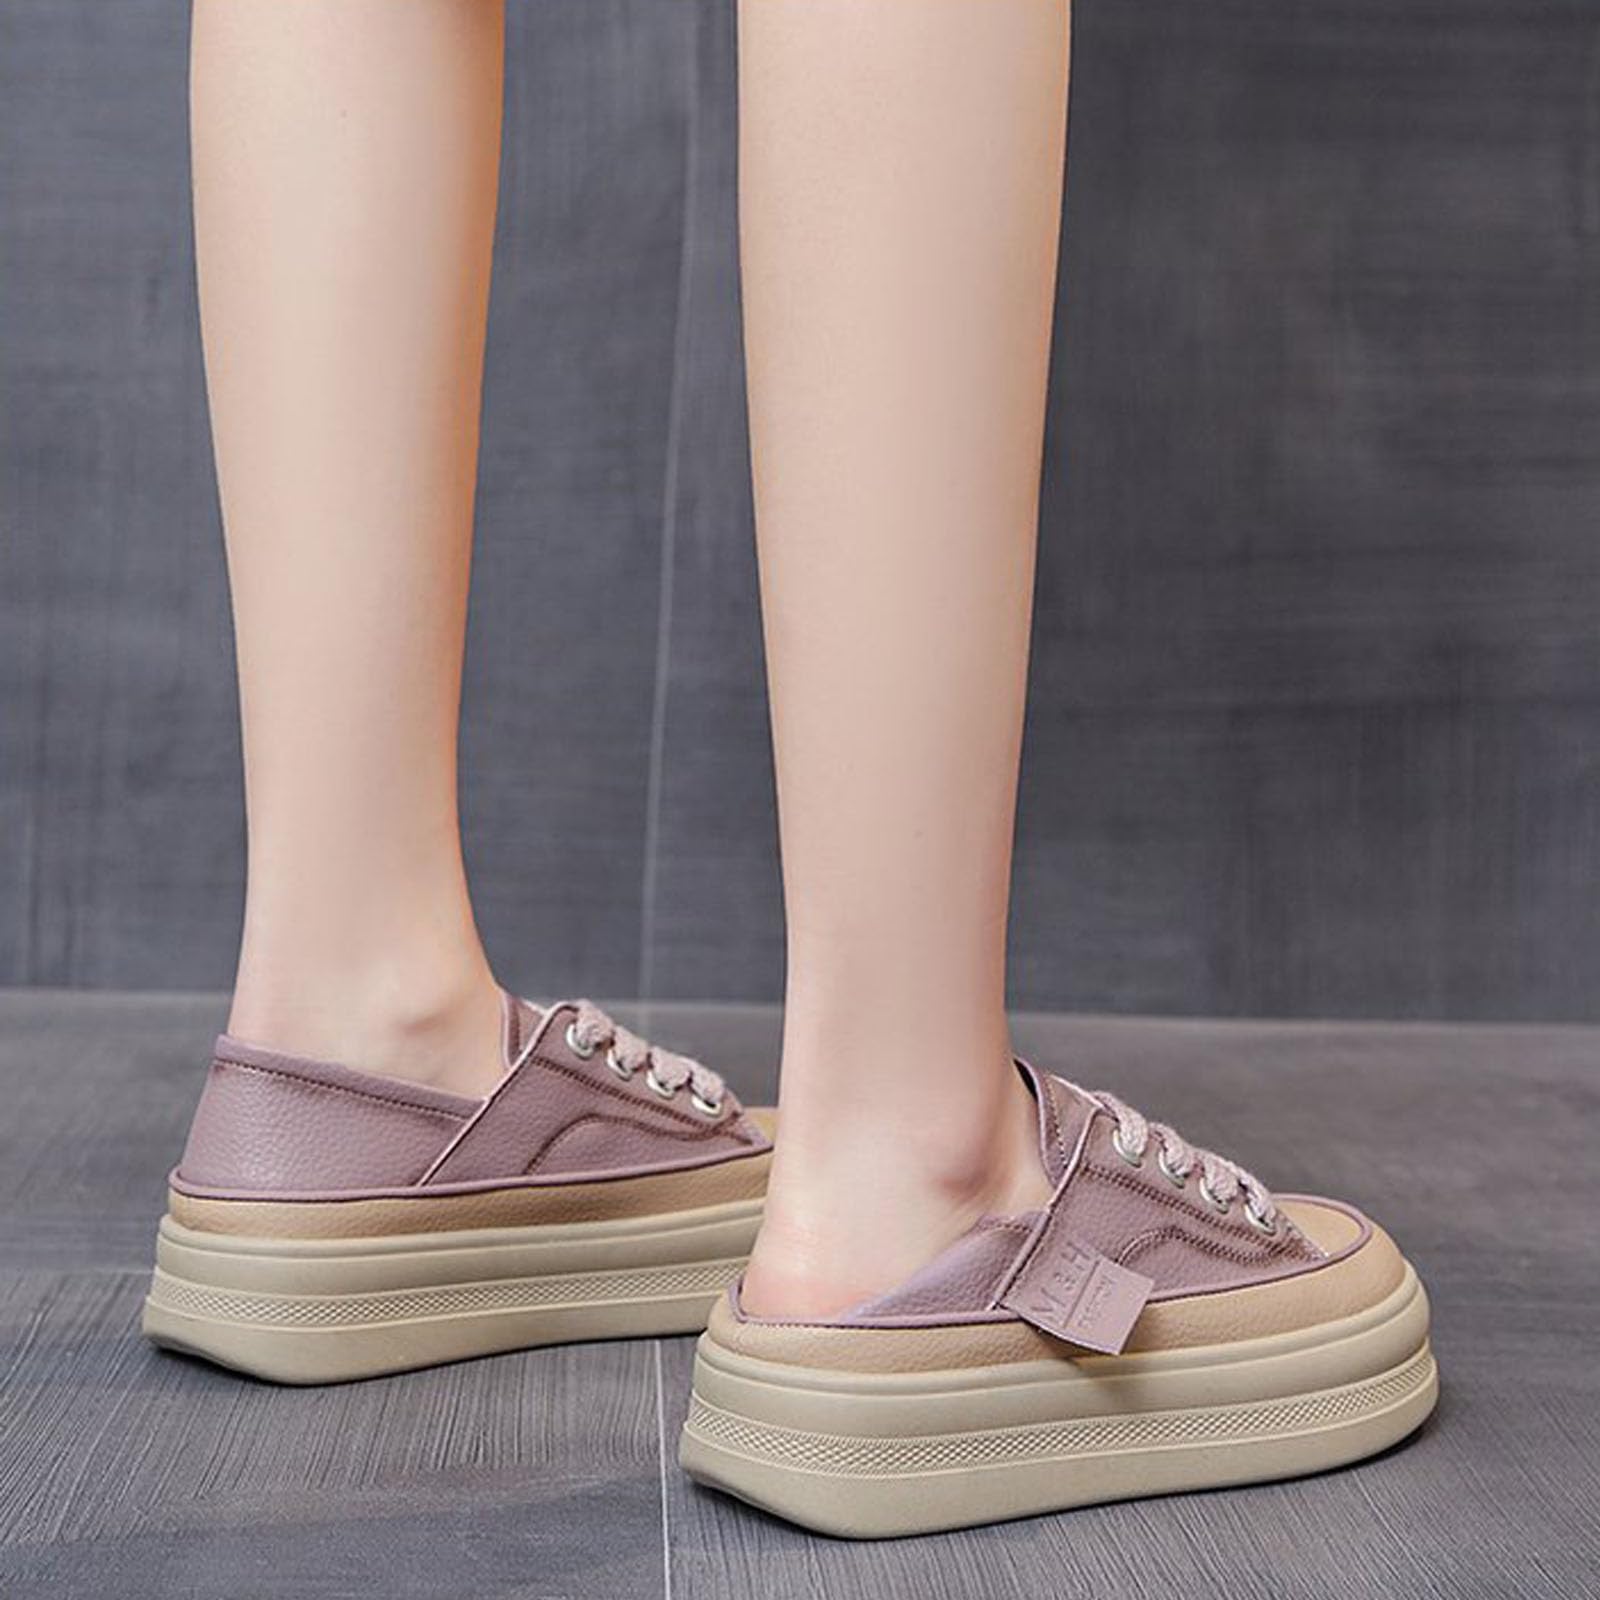 AUNTHUI Women's Lace-Up Flat Shoes Platform Sneakers,Comfortable Casual Walking Anti-Slip Fashion Low Top Tennis Sneakers (Brown,7)